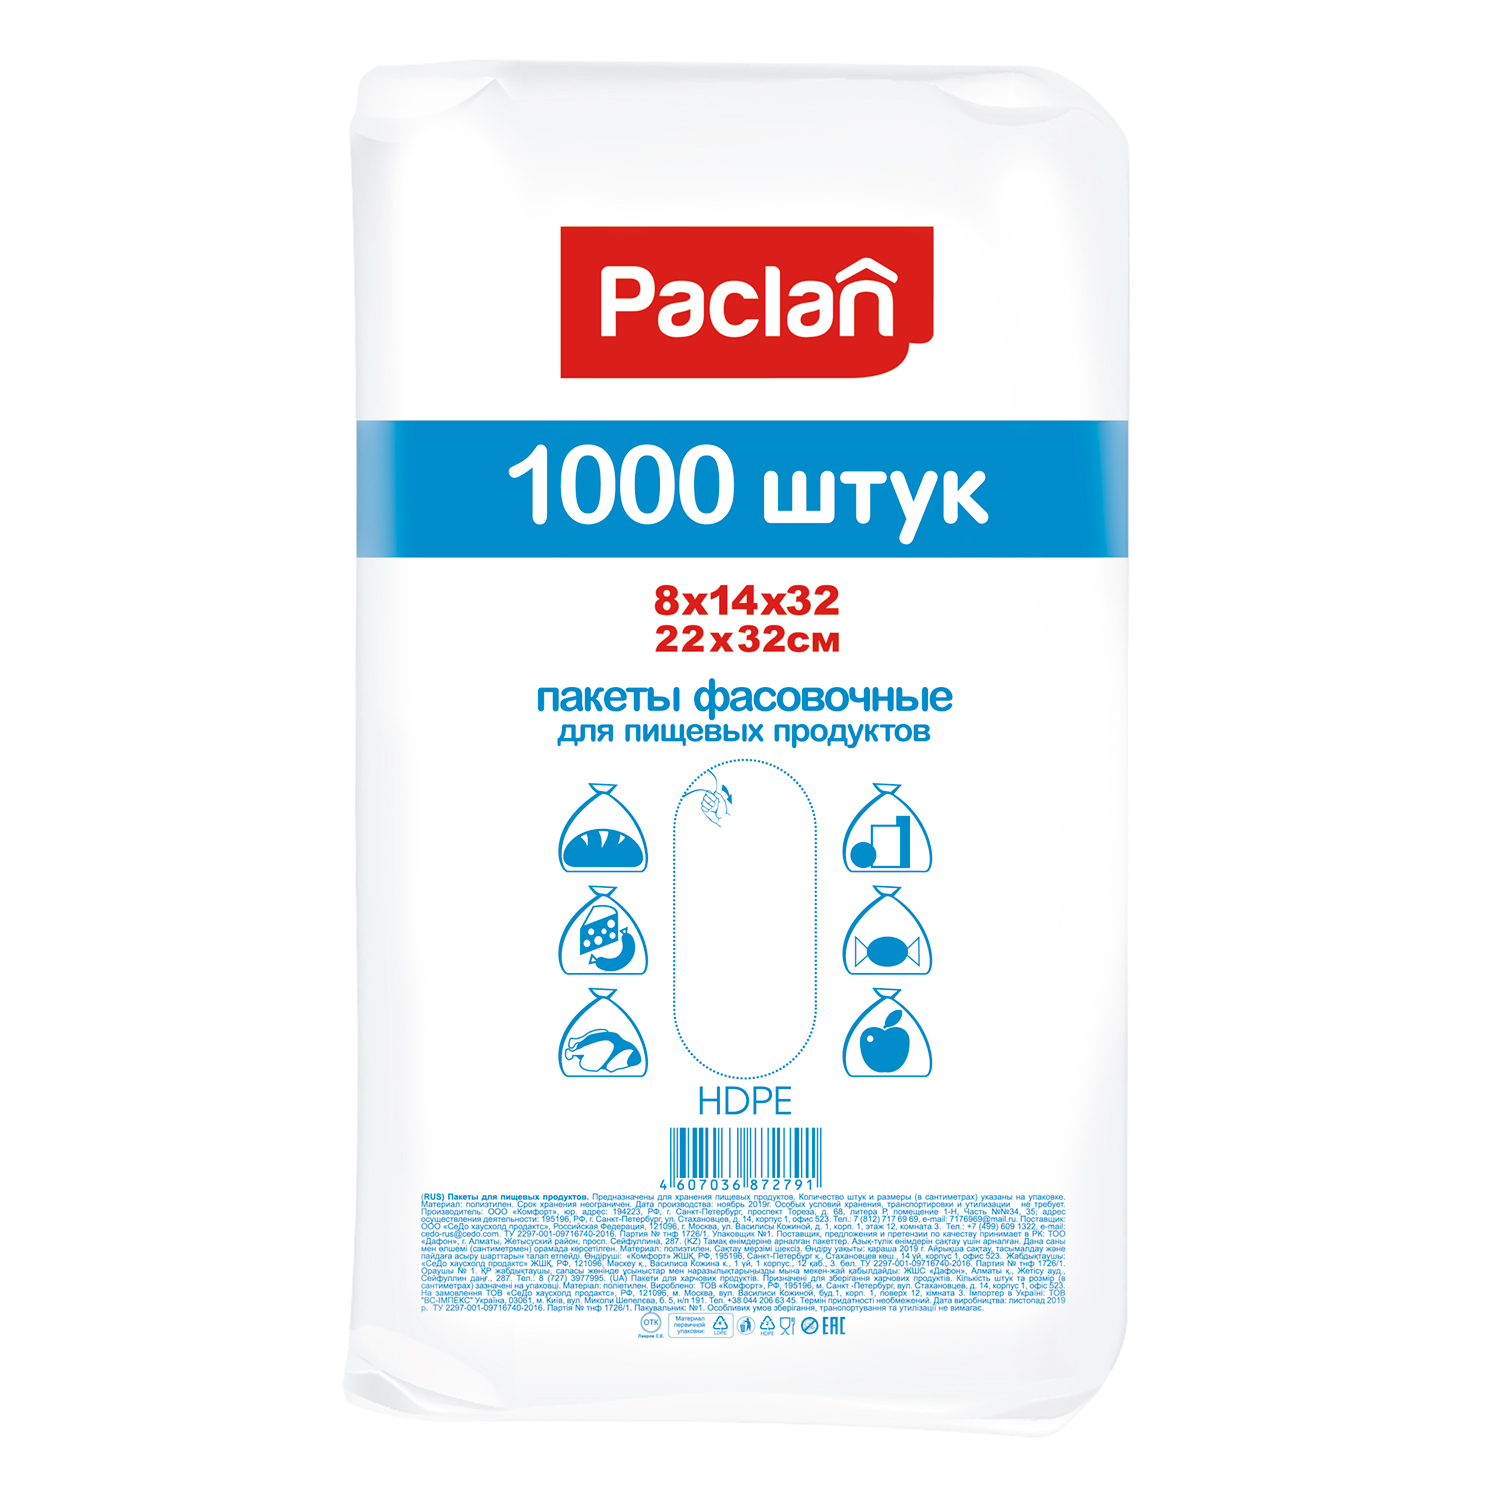 Пакеты фасовочные Paclan 1000 шт - фото 1